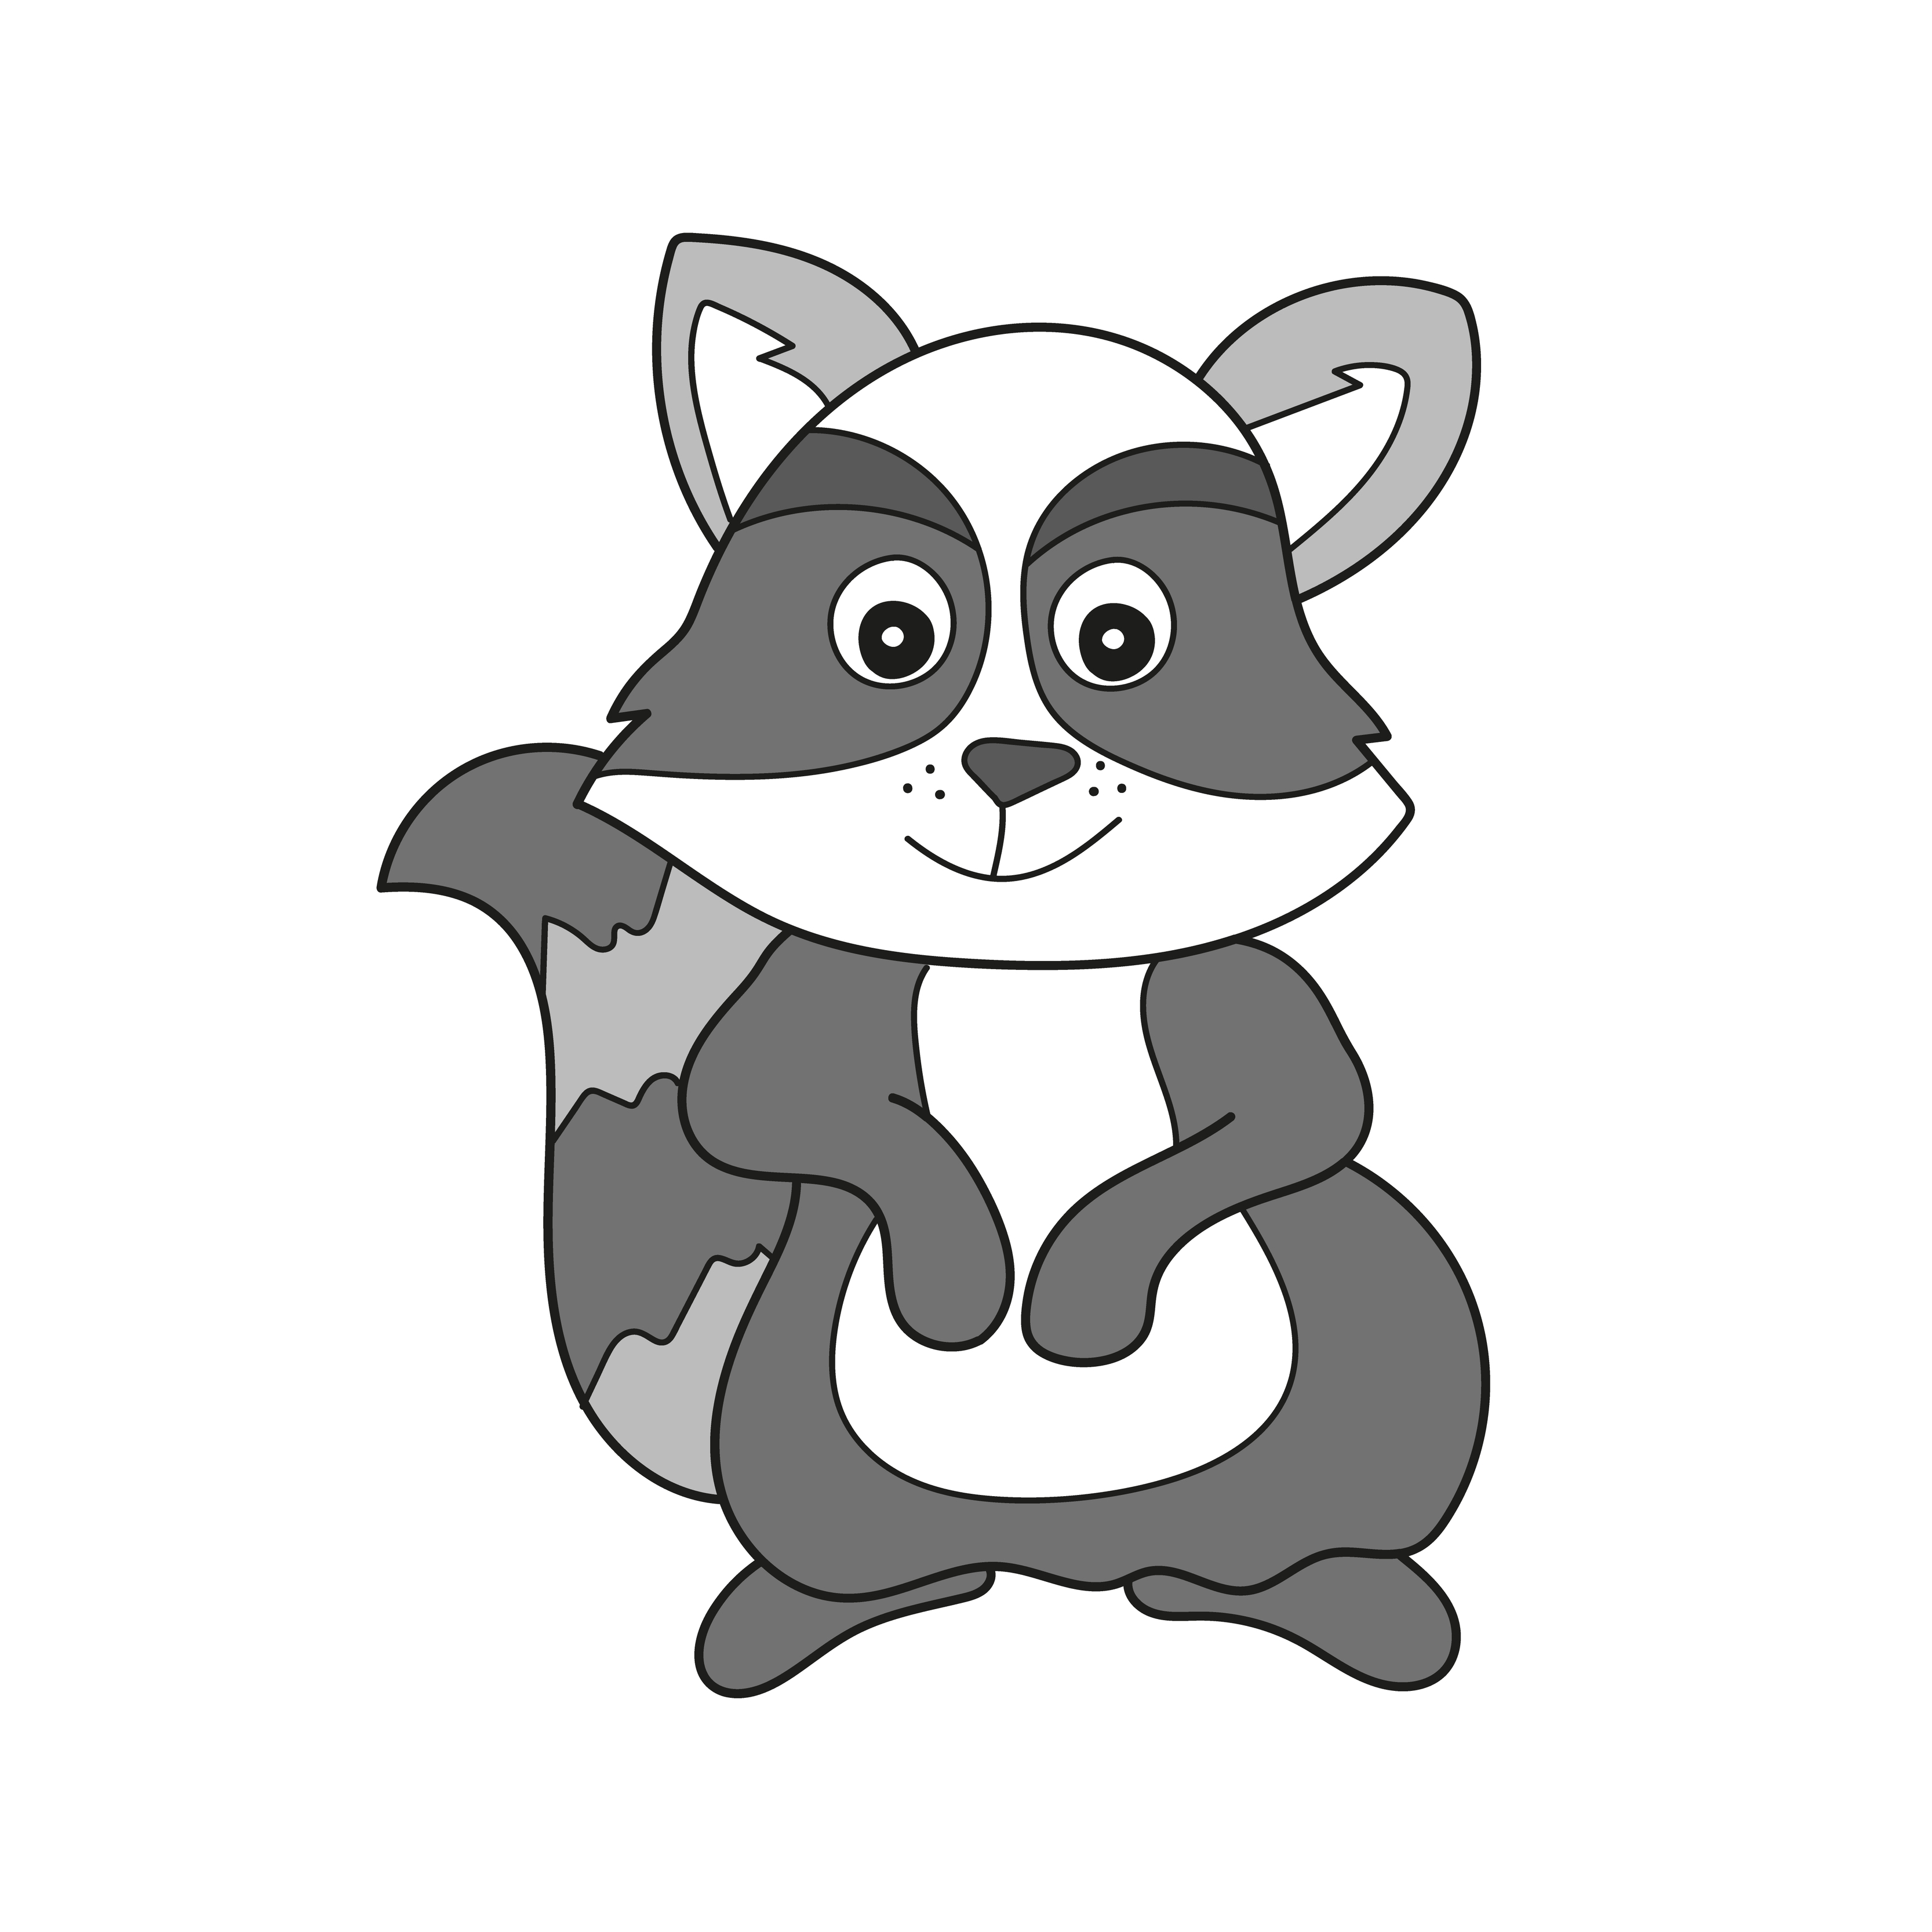 Simple cartoon icon. Illustration of cute funny cartoon raccoon 4597971  Vector Art at Vecteezy